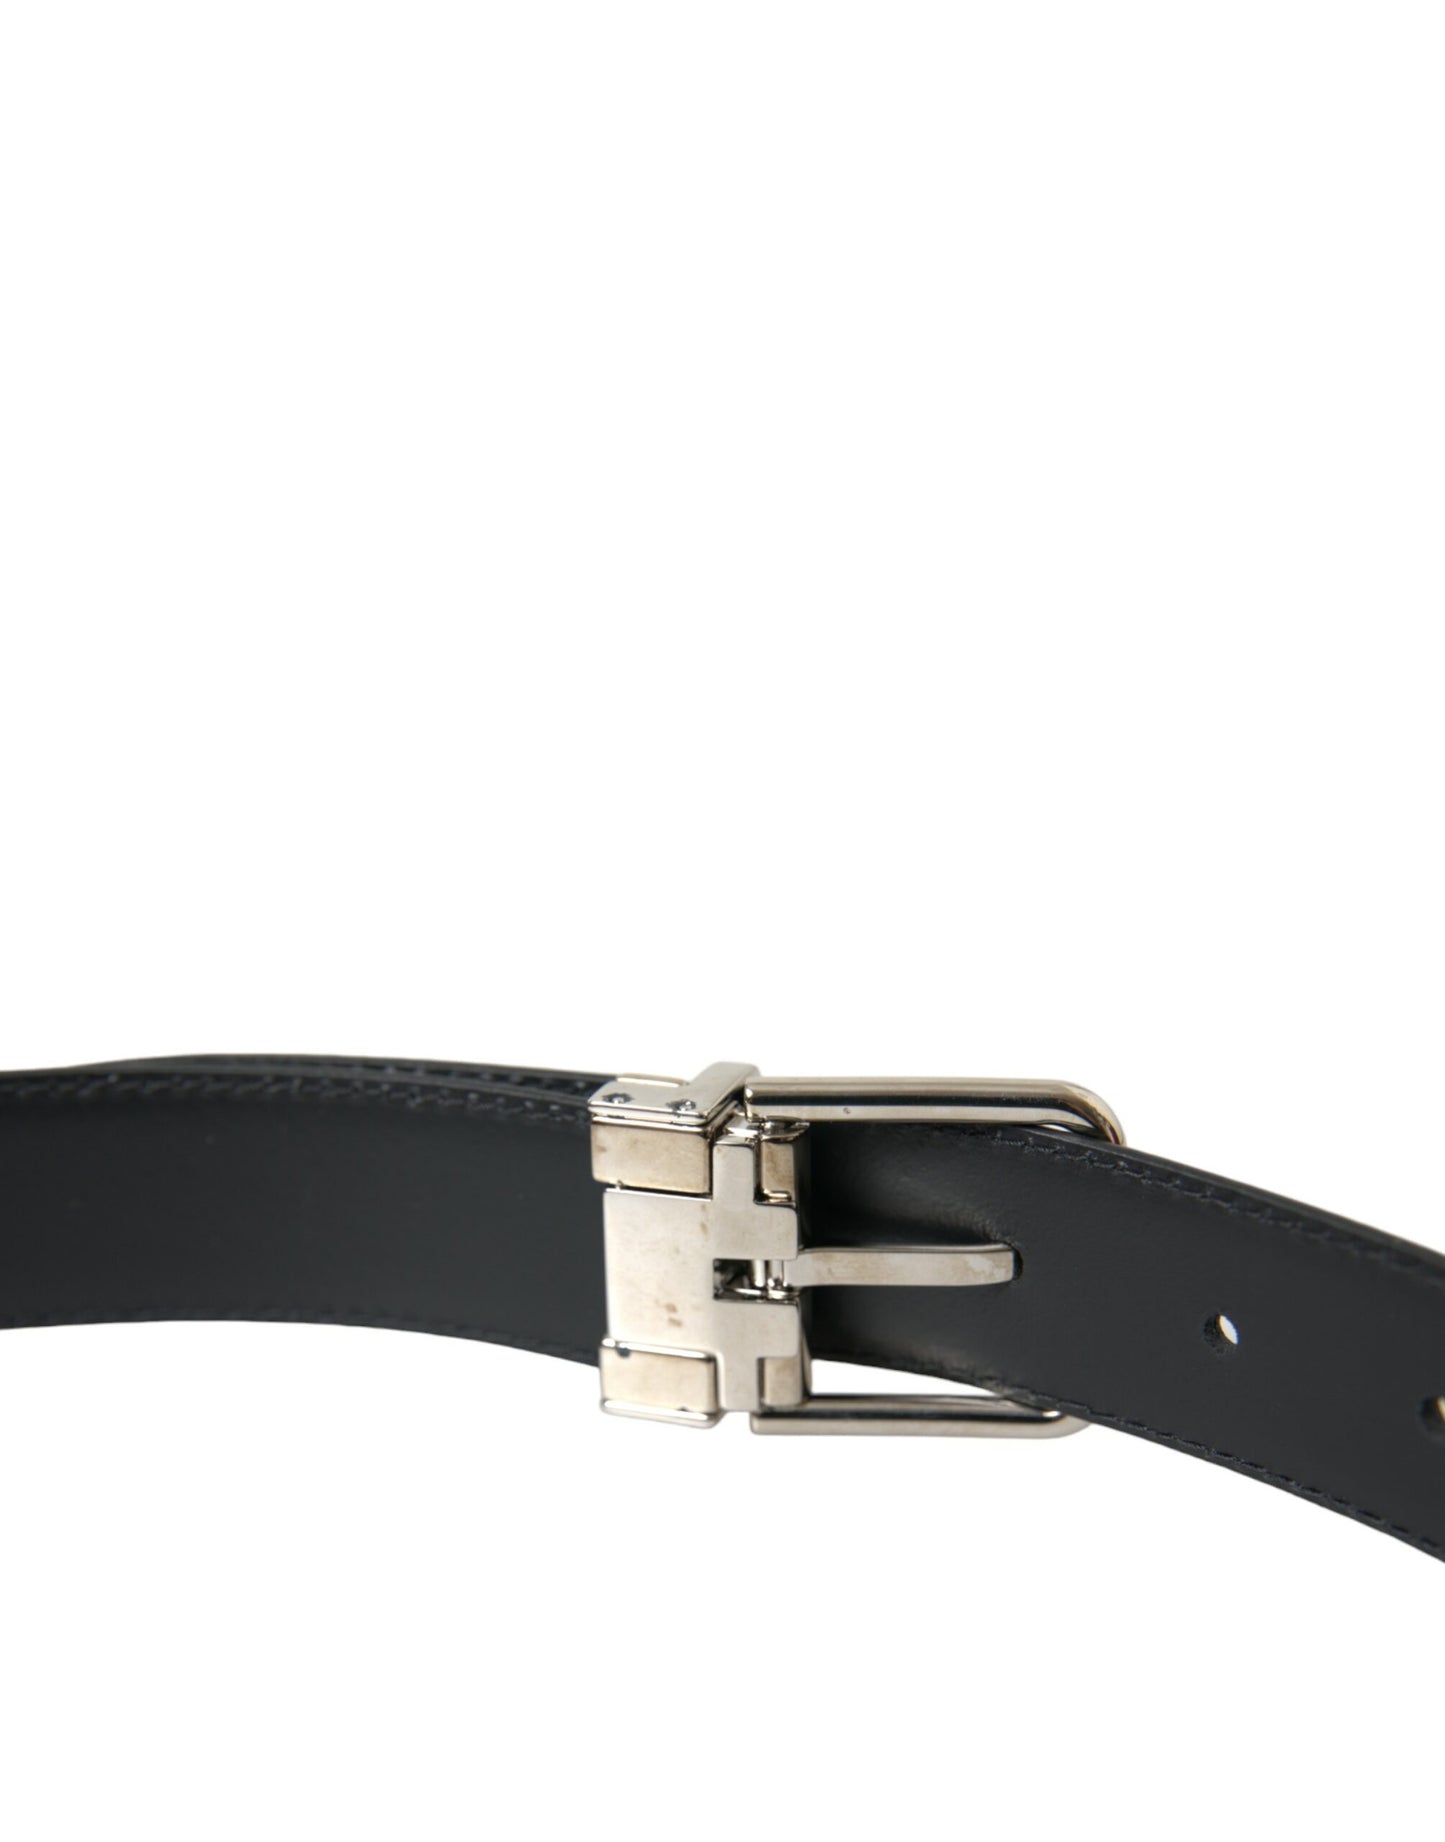 Elegant Black Calf Leather Belt